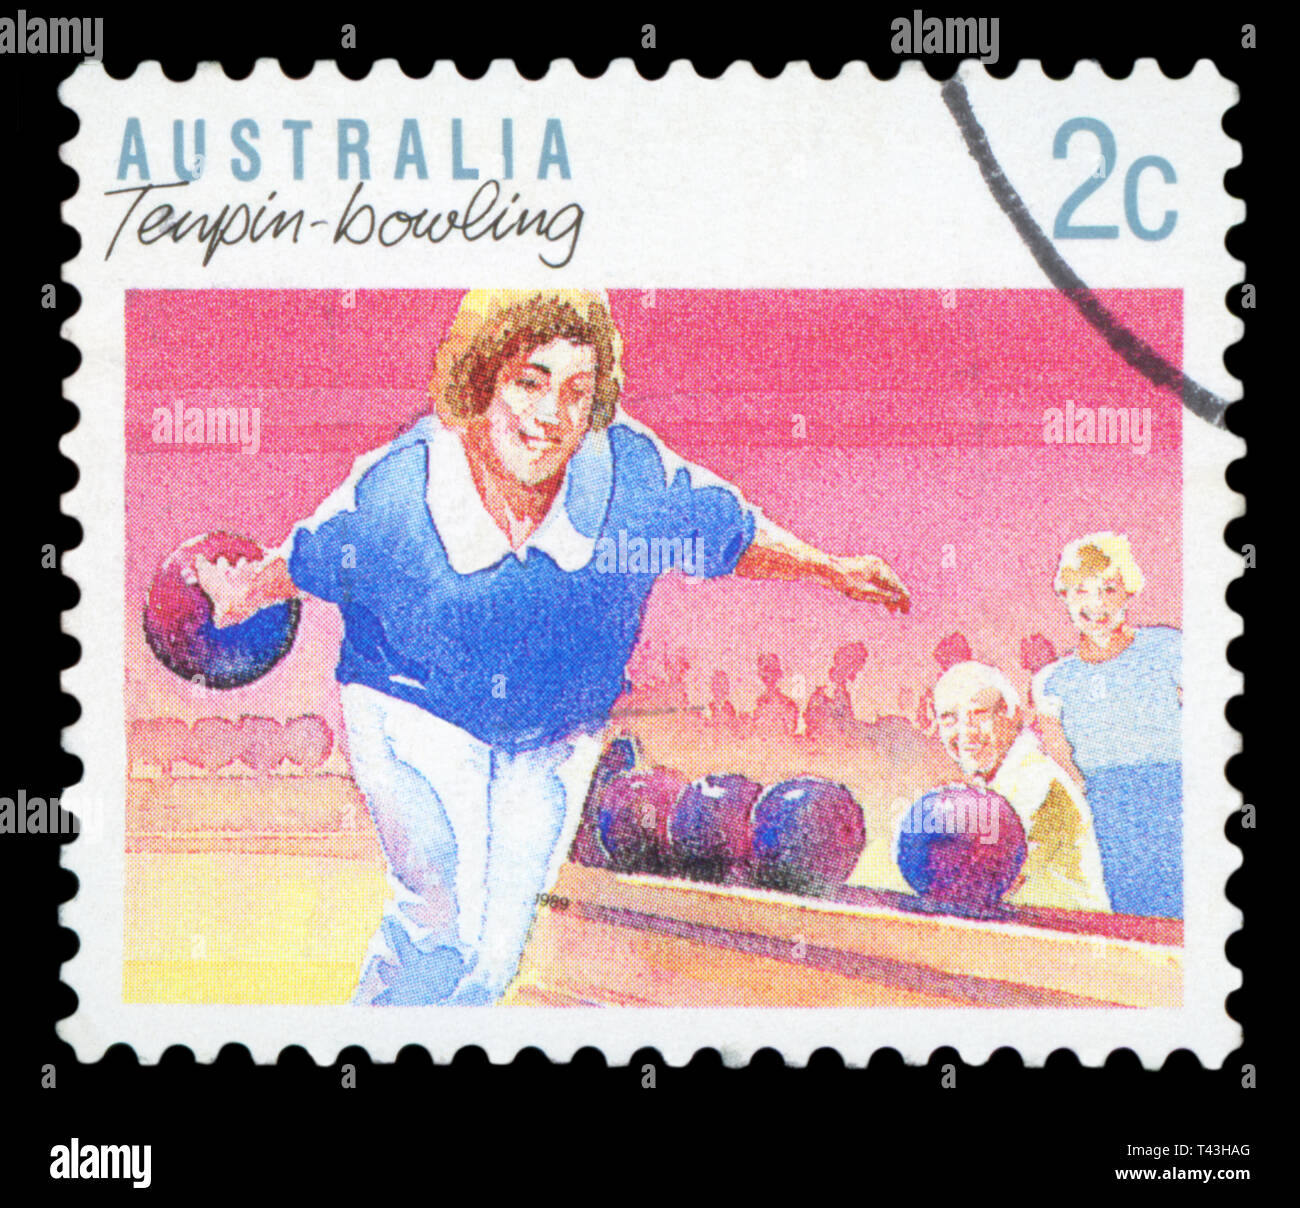 AUSTRALIA - CIRCA 1989: A stamp printed in AUSTRALIA shows the Tenpin Bowling, Sport series, circa 1989. Stock Photo